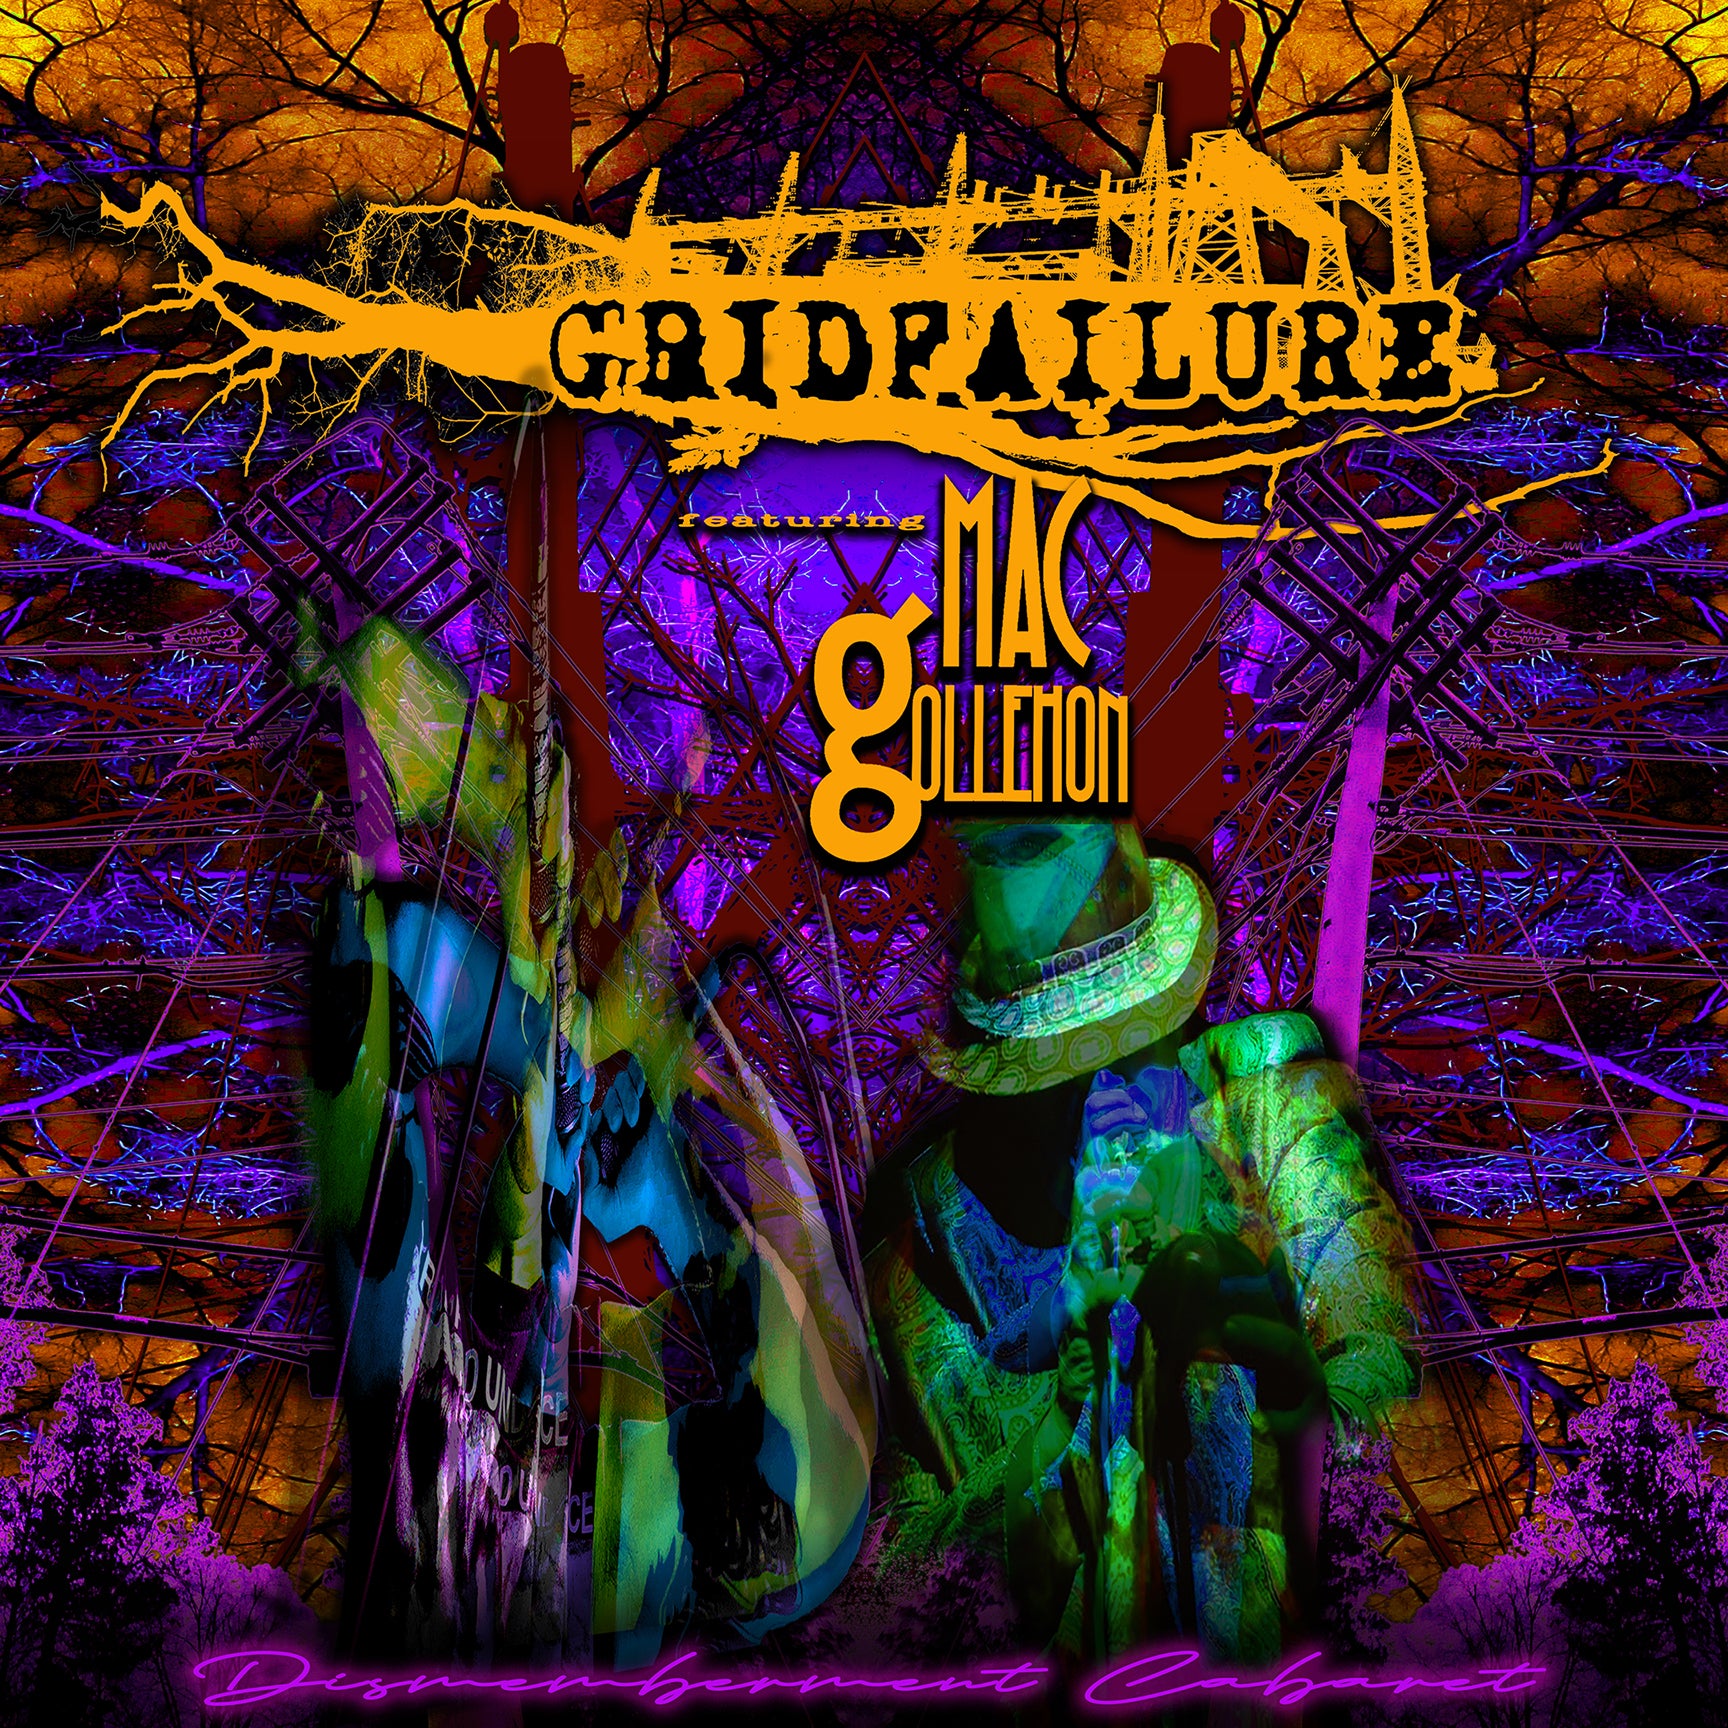 GRIDFAILURE featuring MAC GOLLEHON - Dismemberment Cabaret